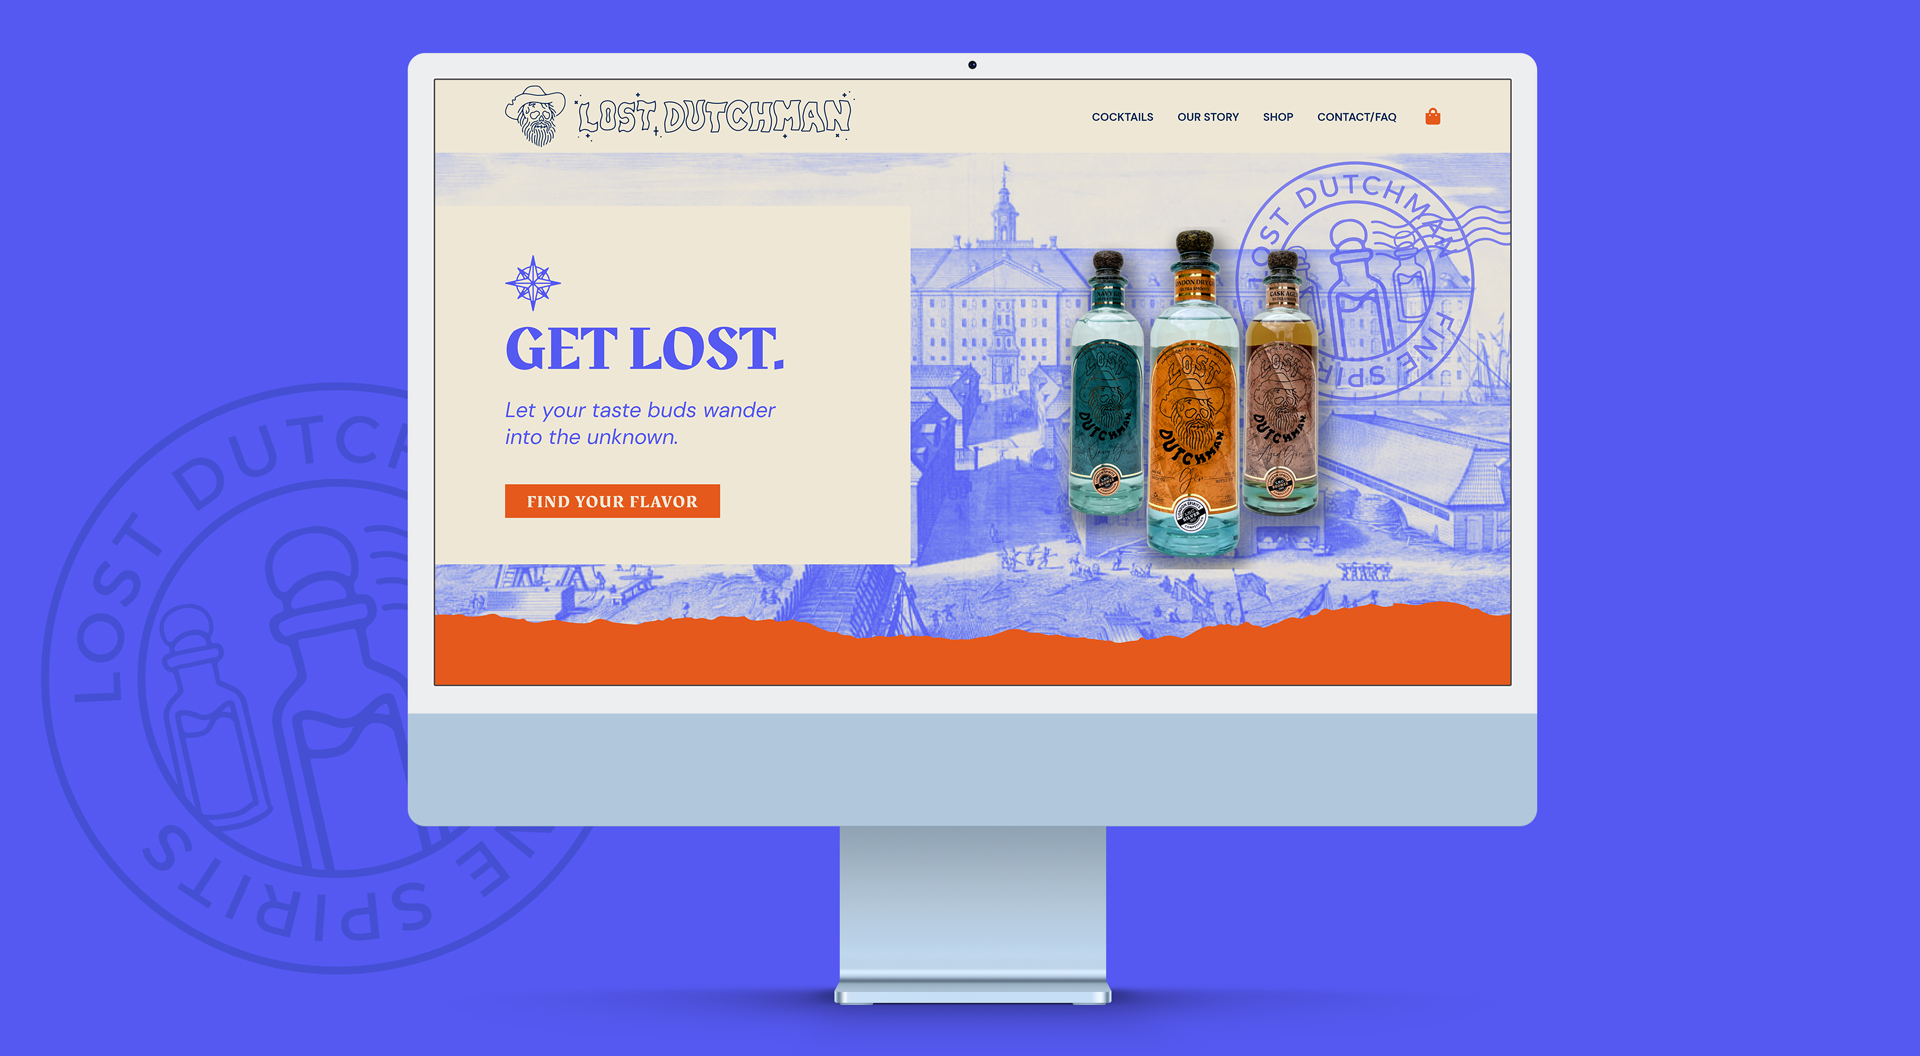 Lost Dutchman Spirits - Website Design Mockup